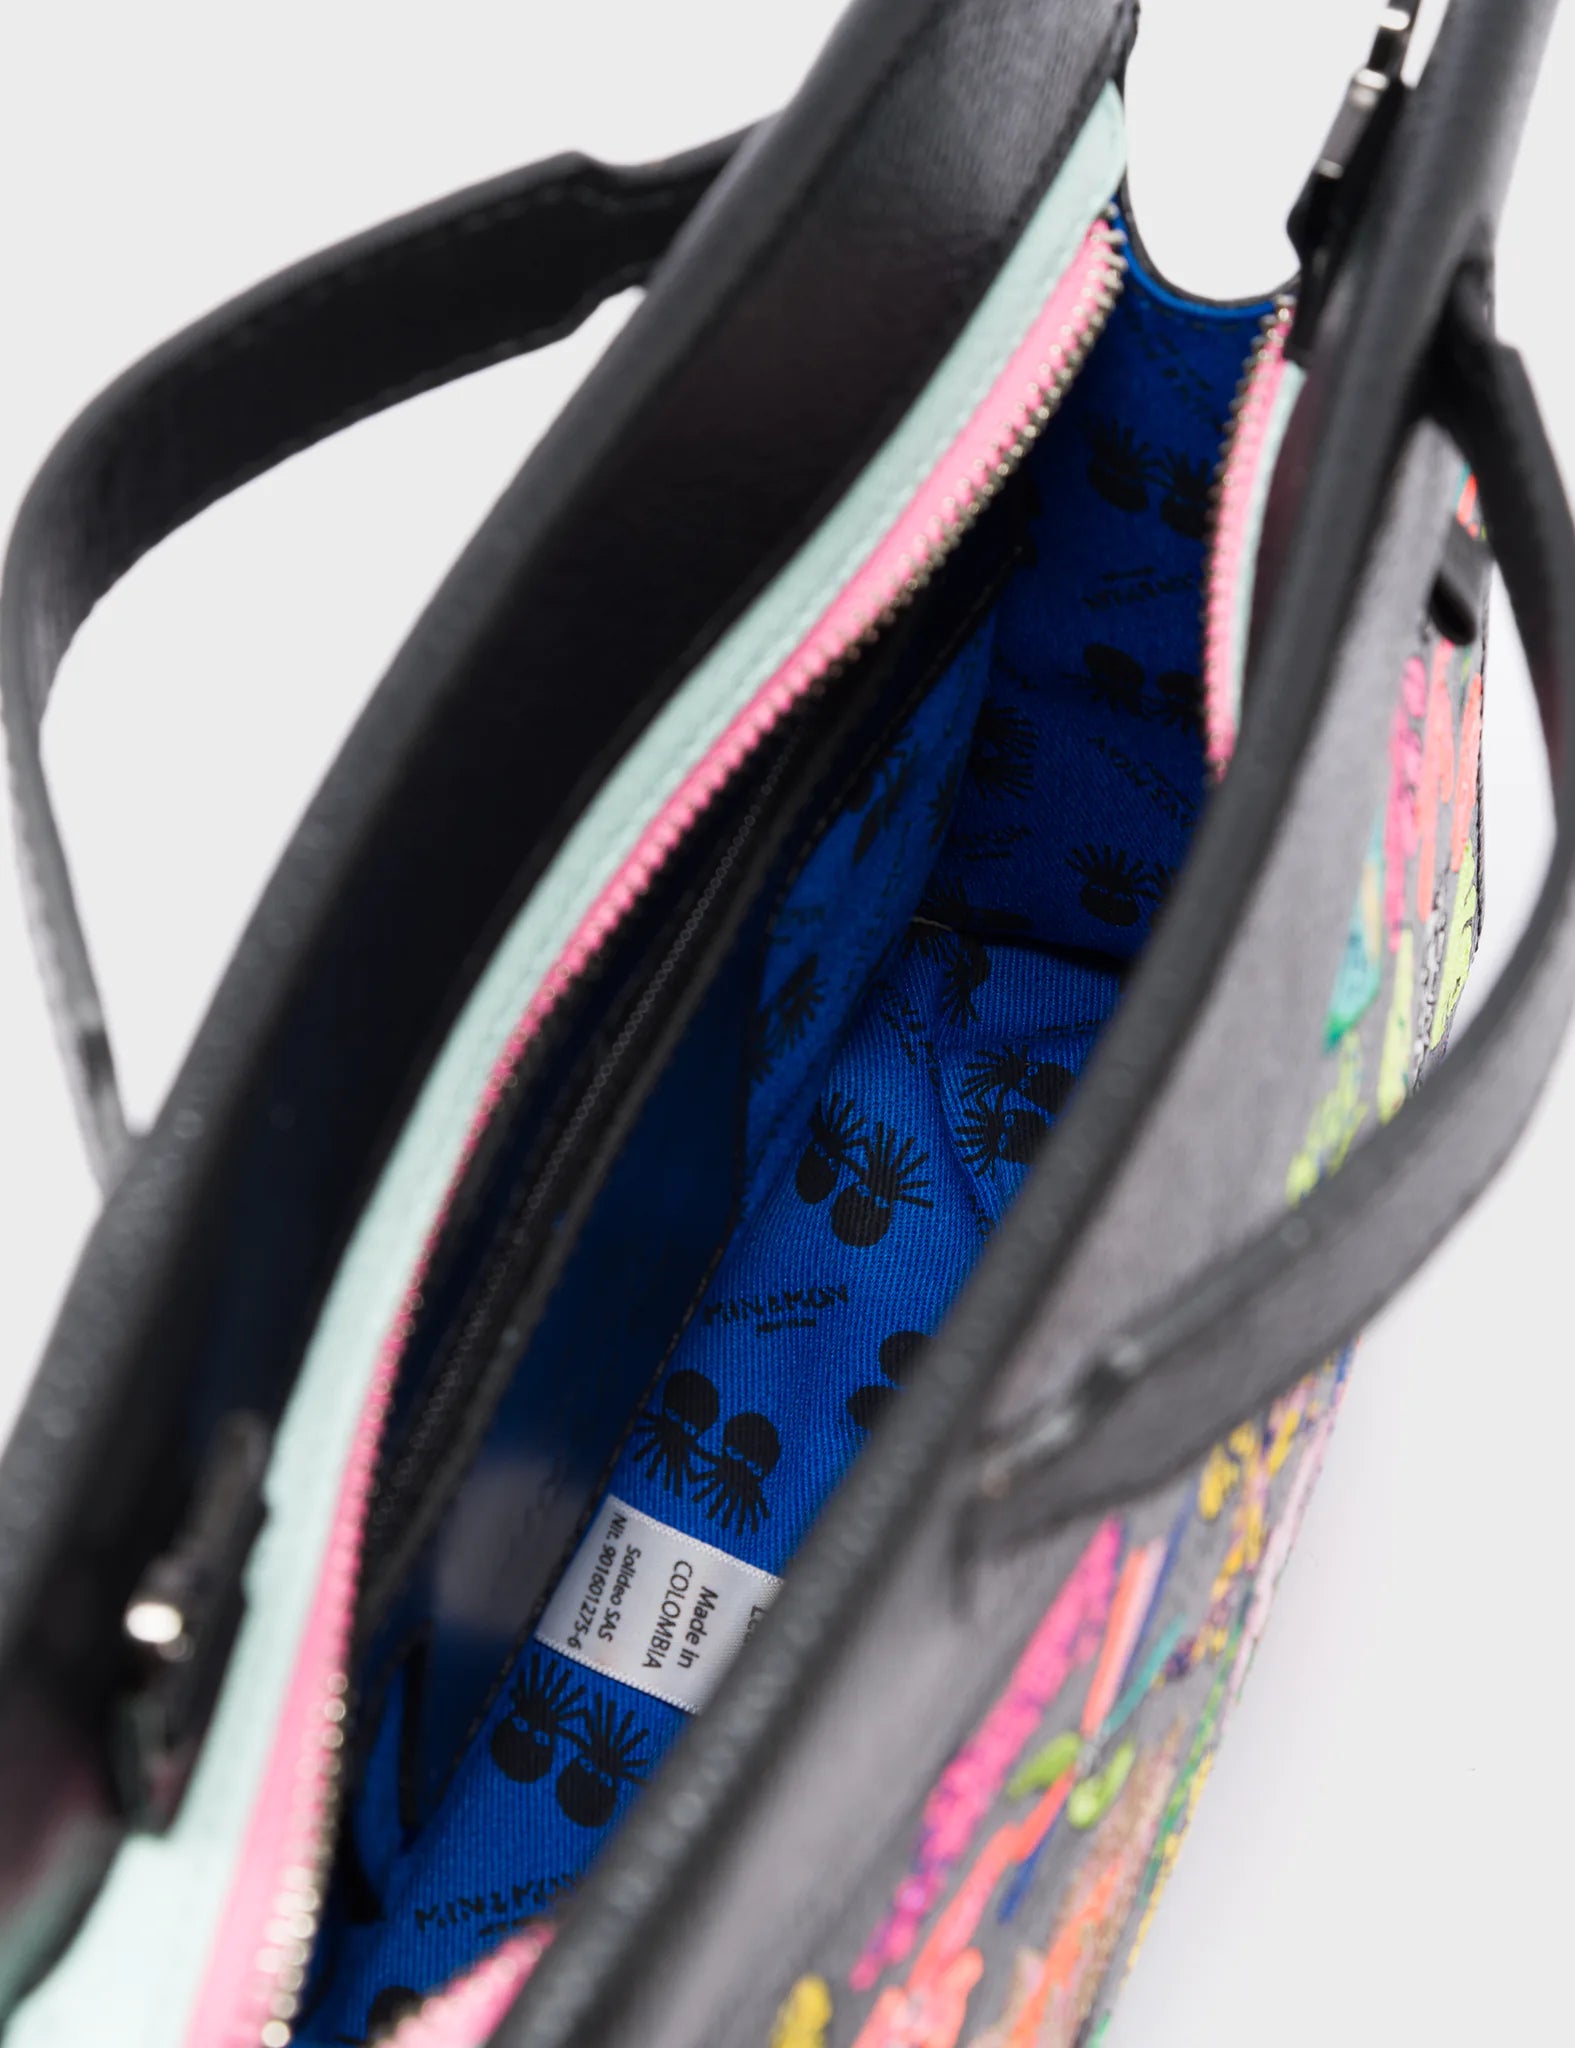 Vali Crossbody Small Black Leather Bag - El Tropico Print and Embroidery Design - Inside